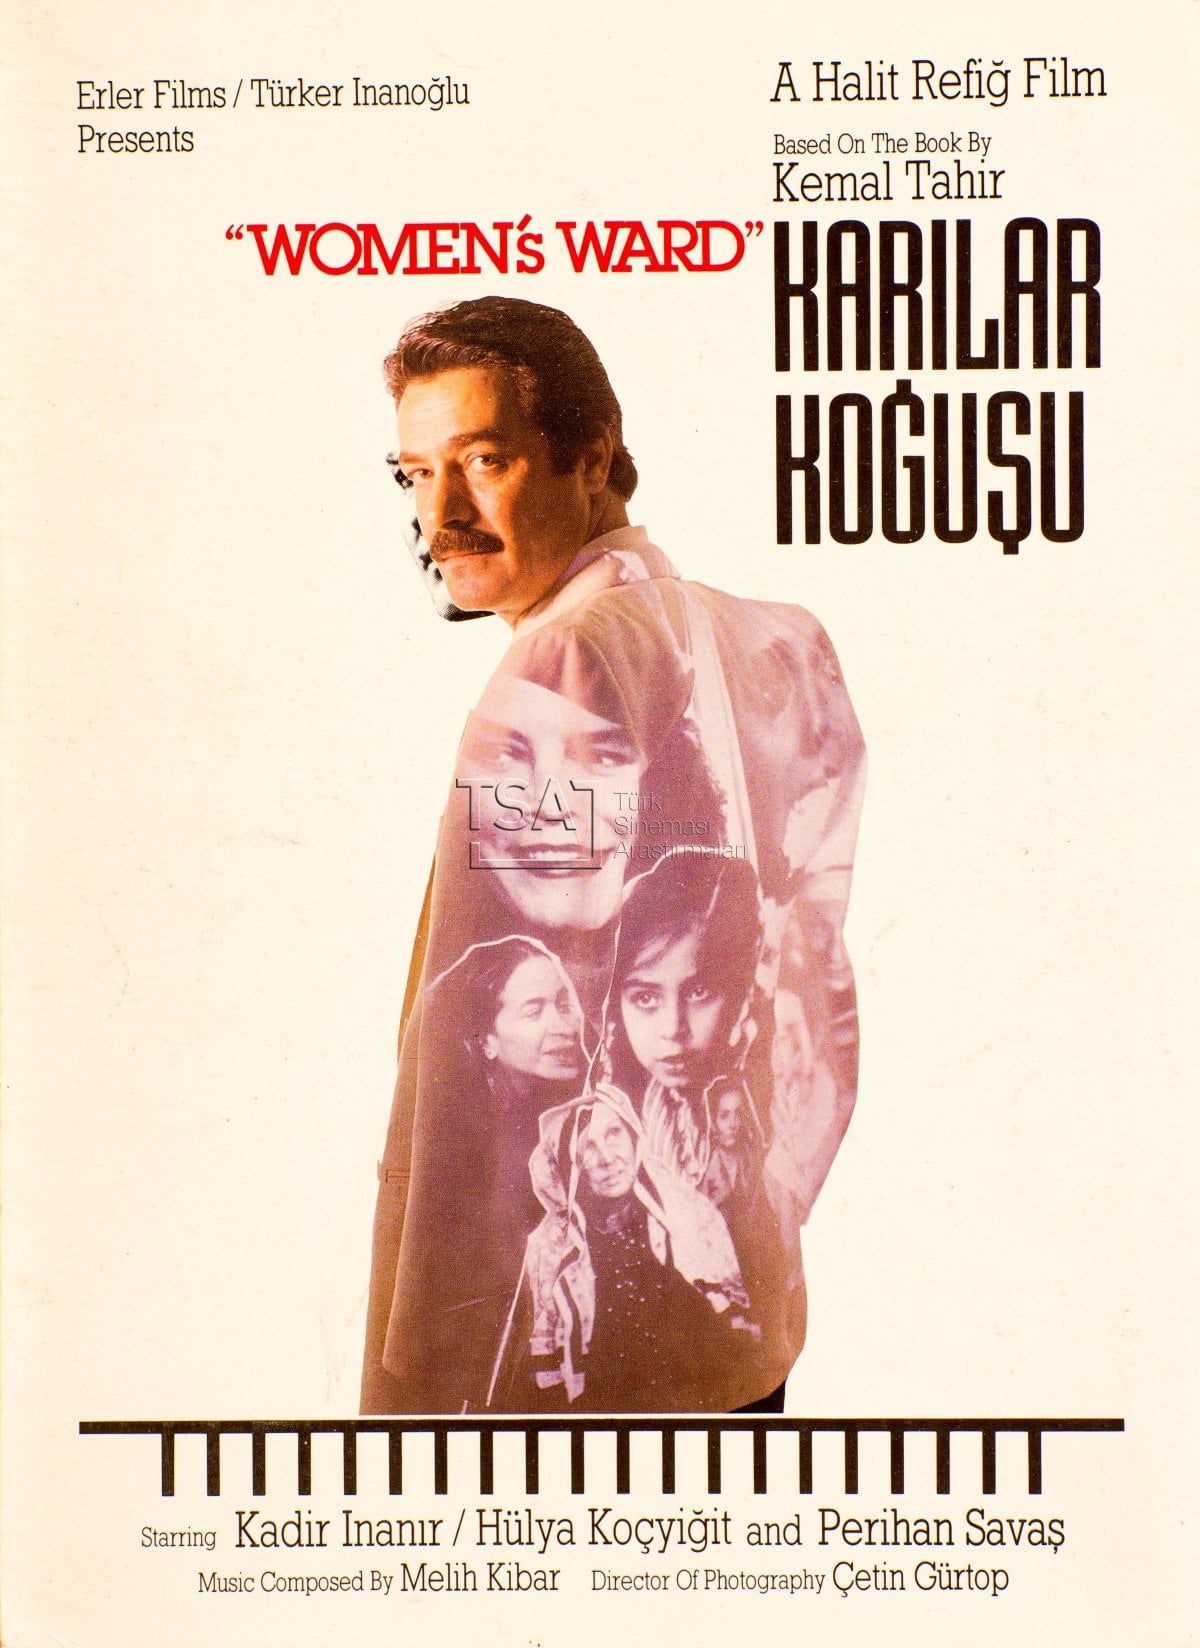 Karilar Kogusu (1990)